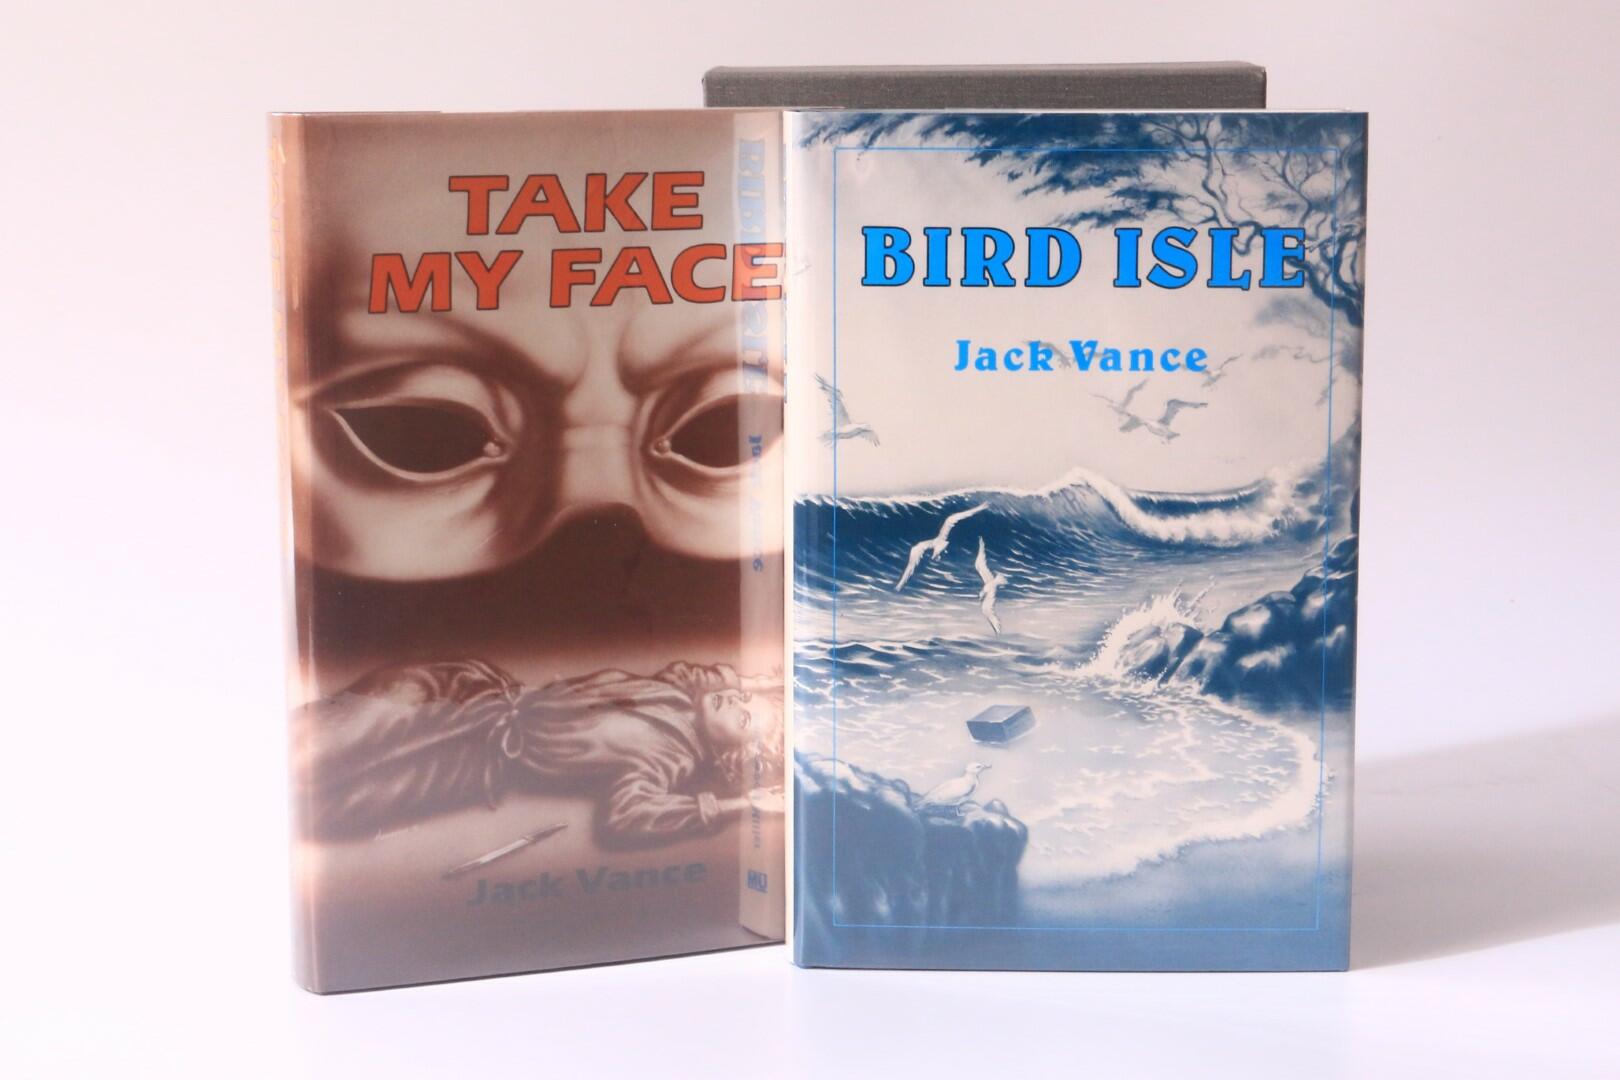 Jack Vance - Bird Isle w/ Take my Face - Underwood-Miller, 1988, Signed Limited Edition.